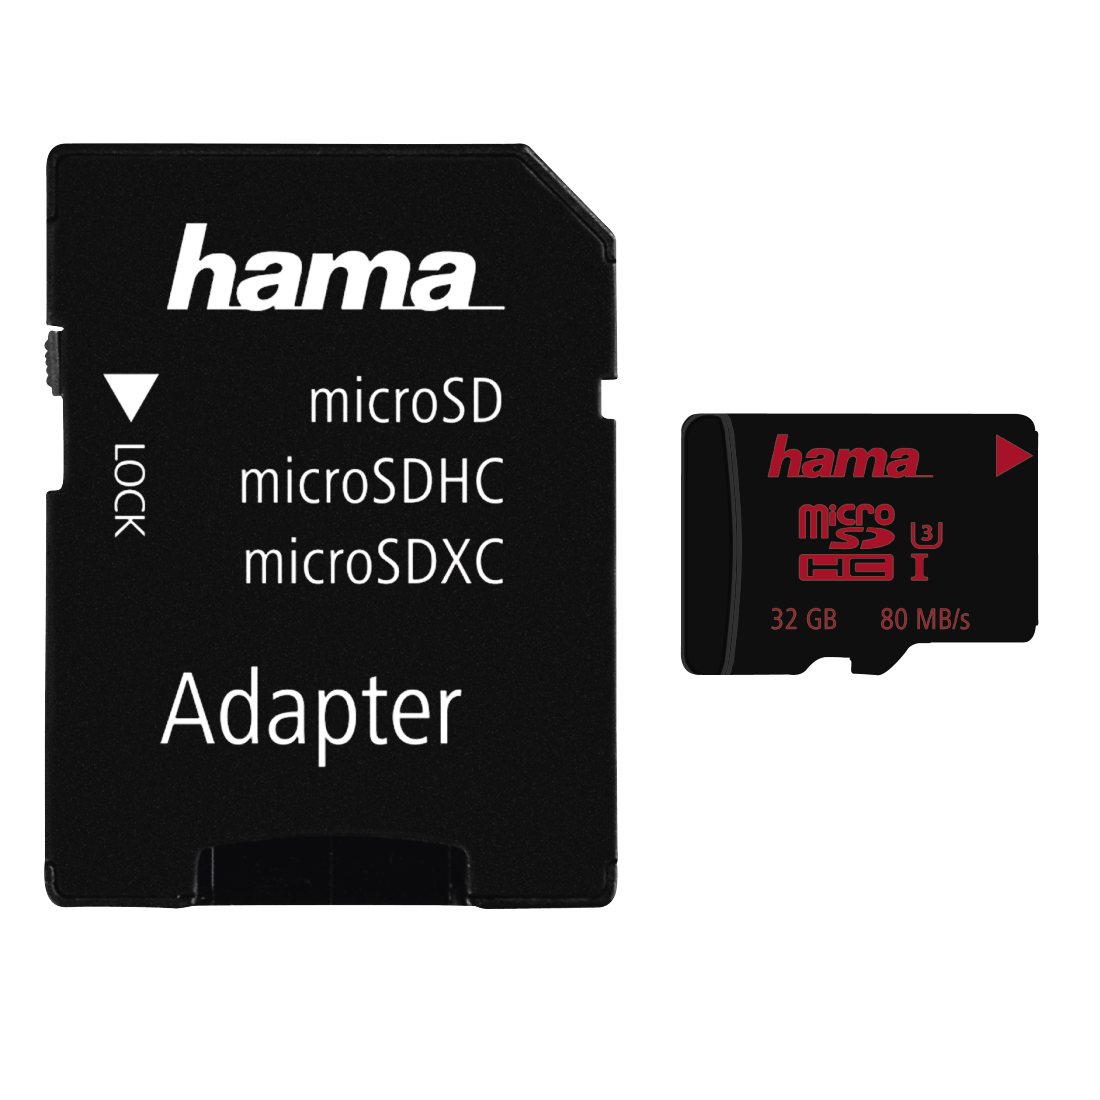 Hama 32GB Class 3 microSDHC UHS